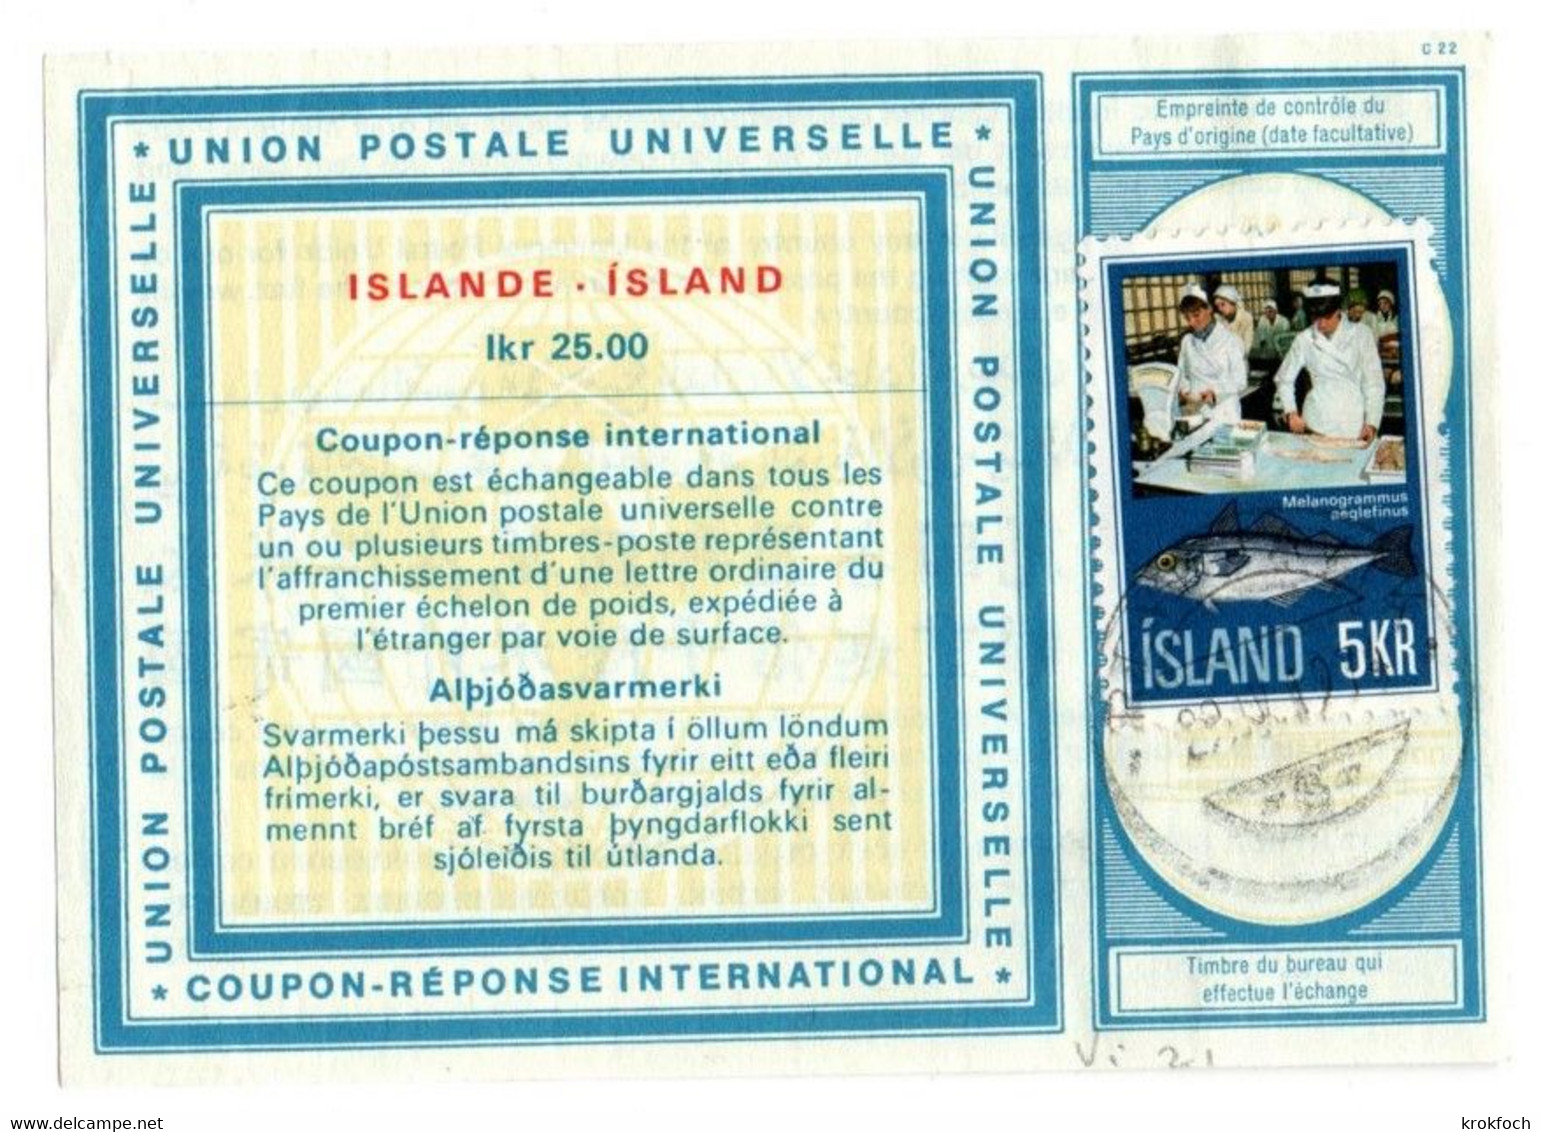 Coupon-réponse Islande Modèle Vi 21 Ikr 25.00 Avec Timbre 5 Kr - IRC CRI IAS - Postal Stationery